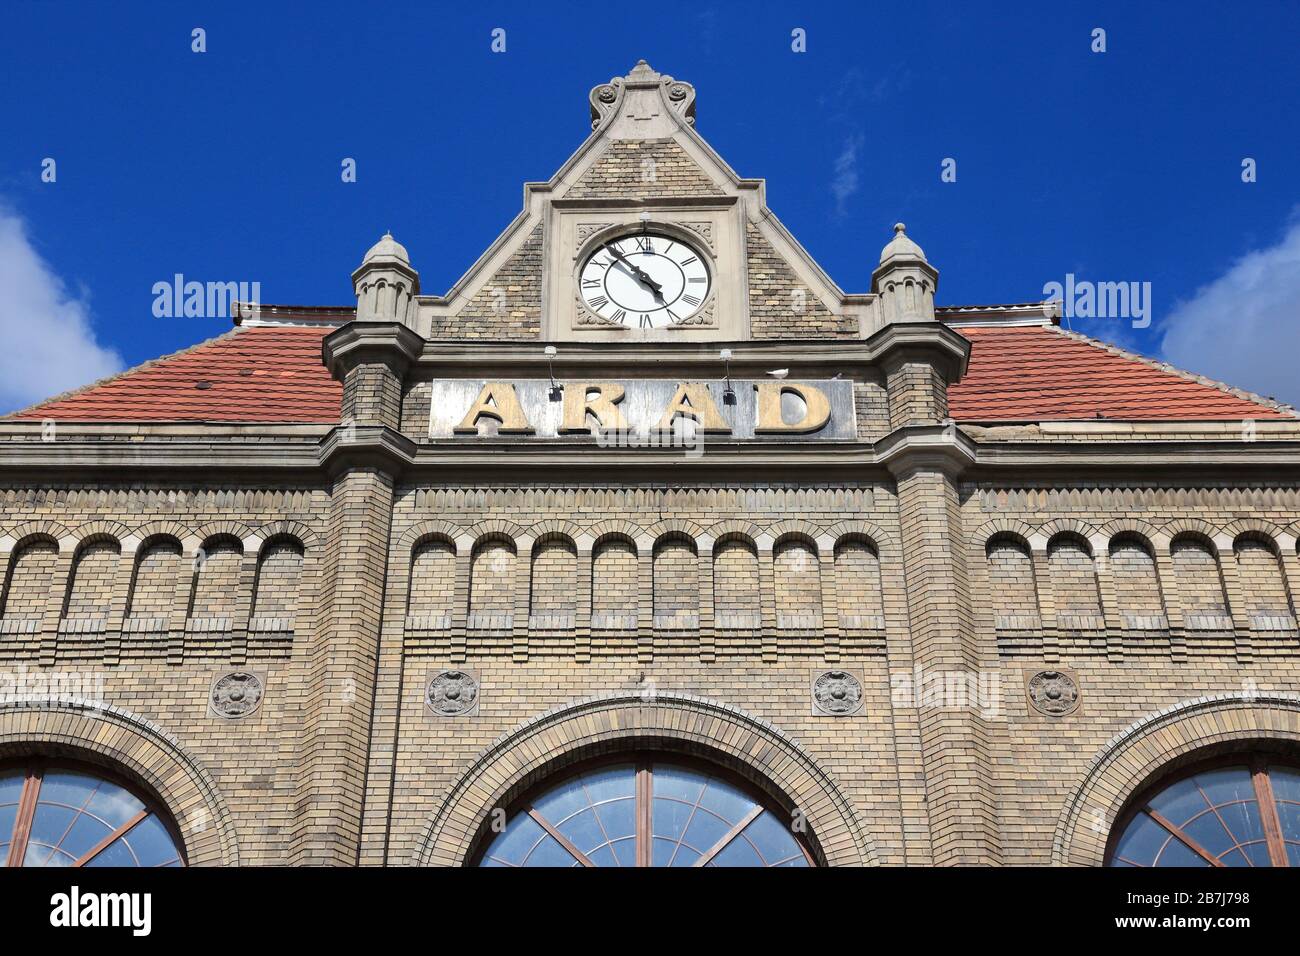 Arad city in Romania. Train station building. Stock Photo